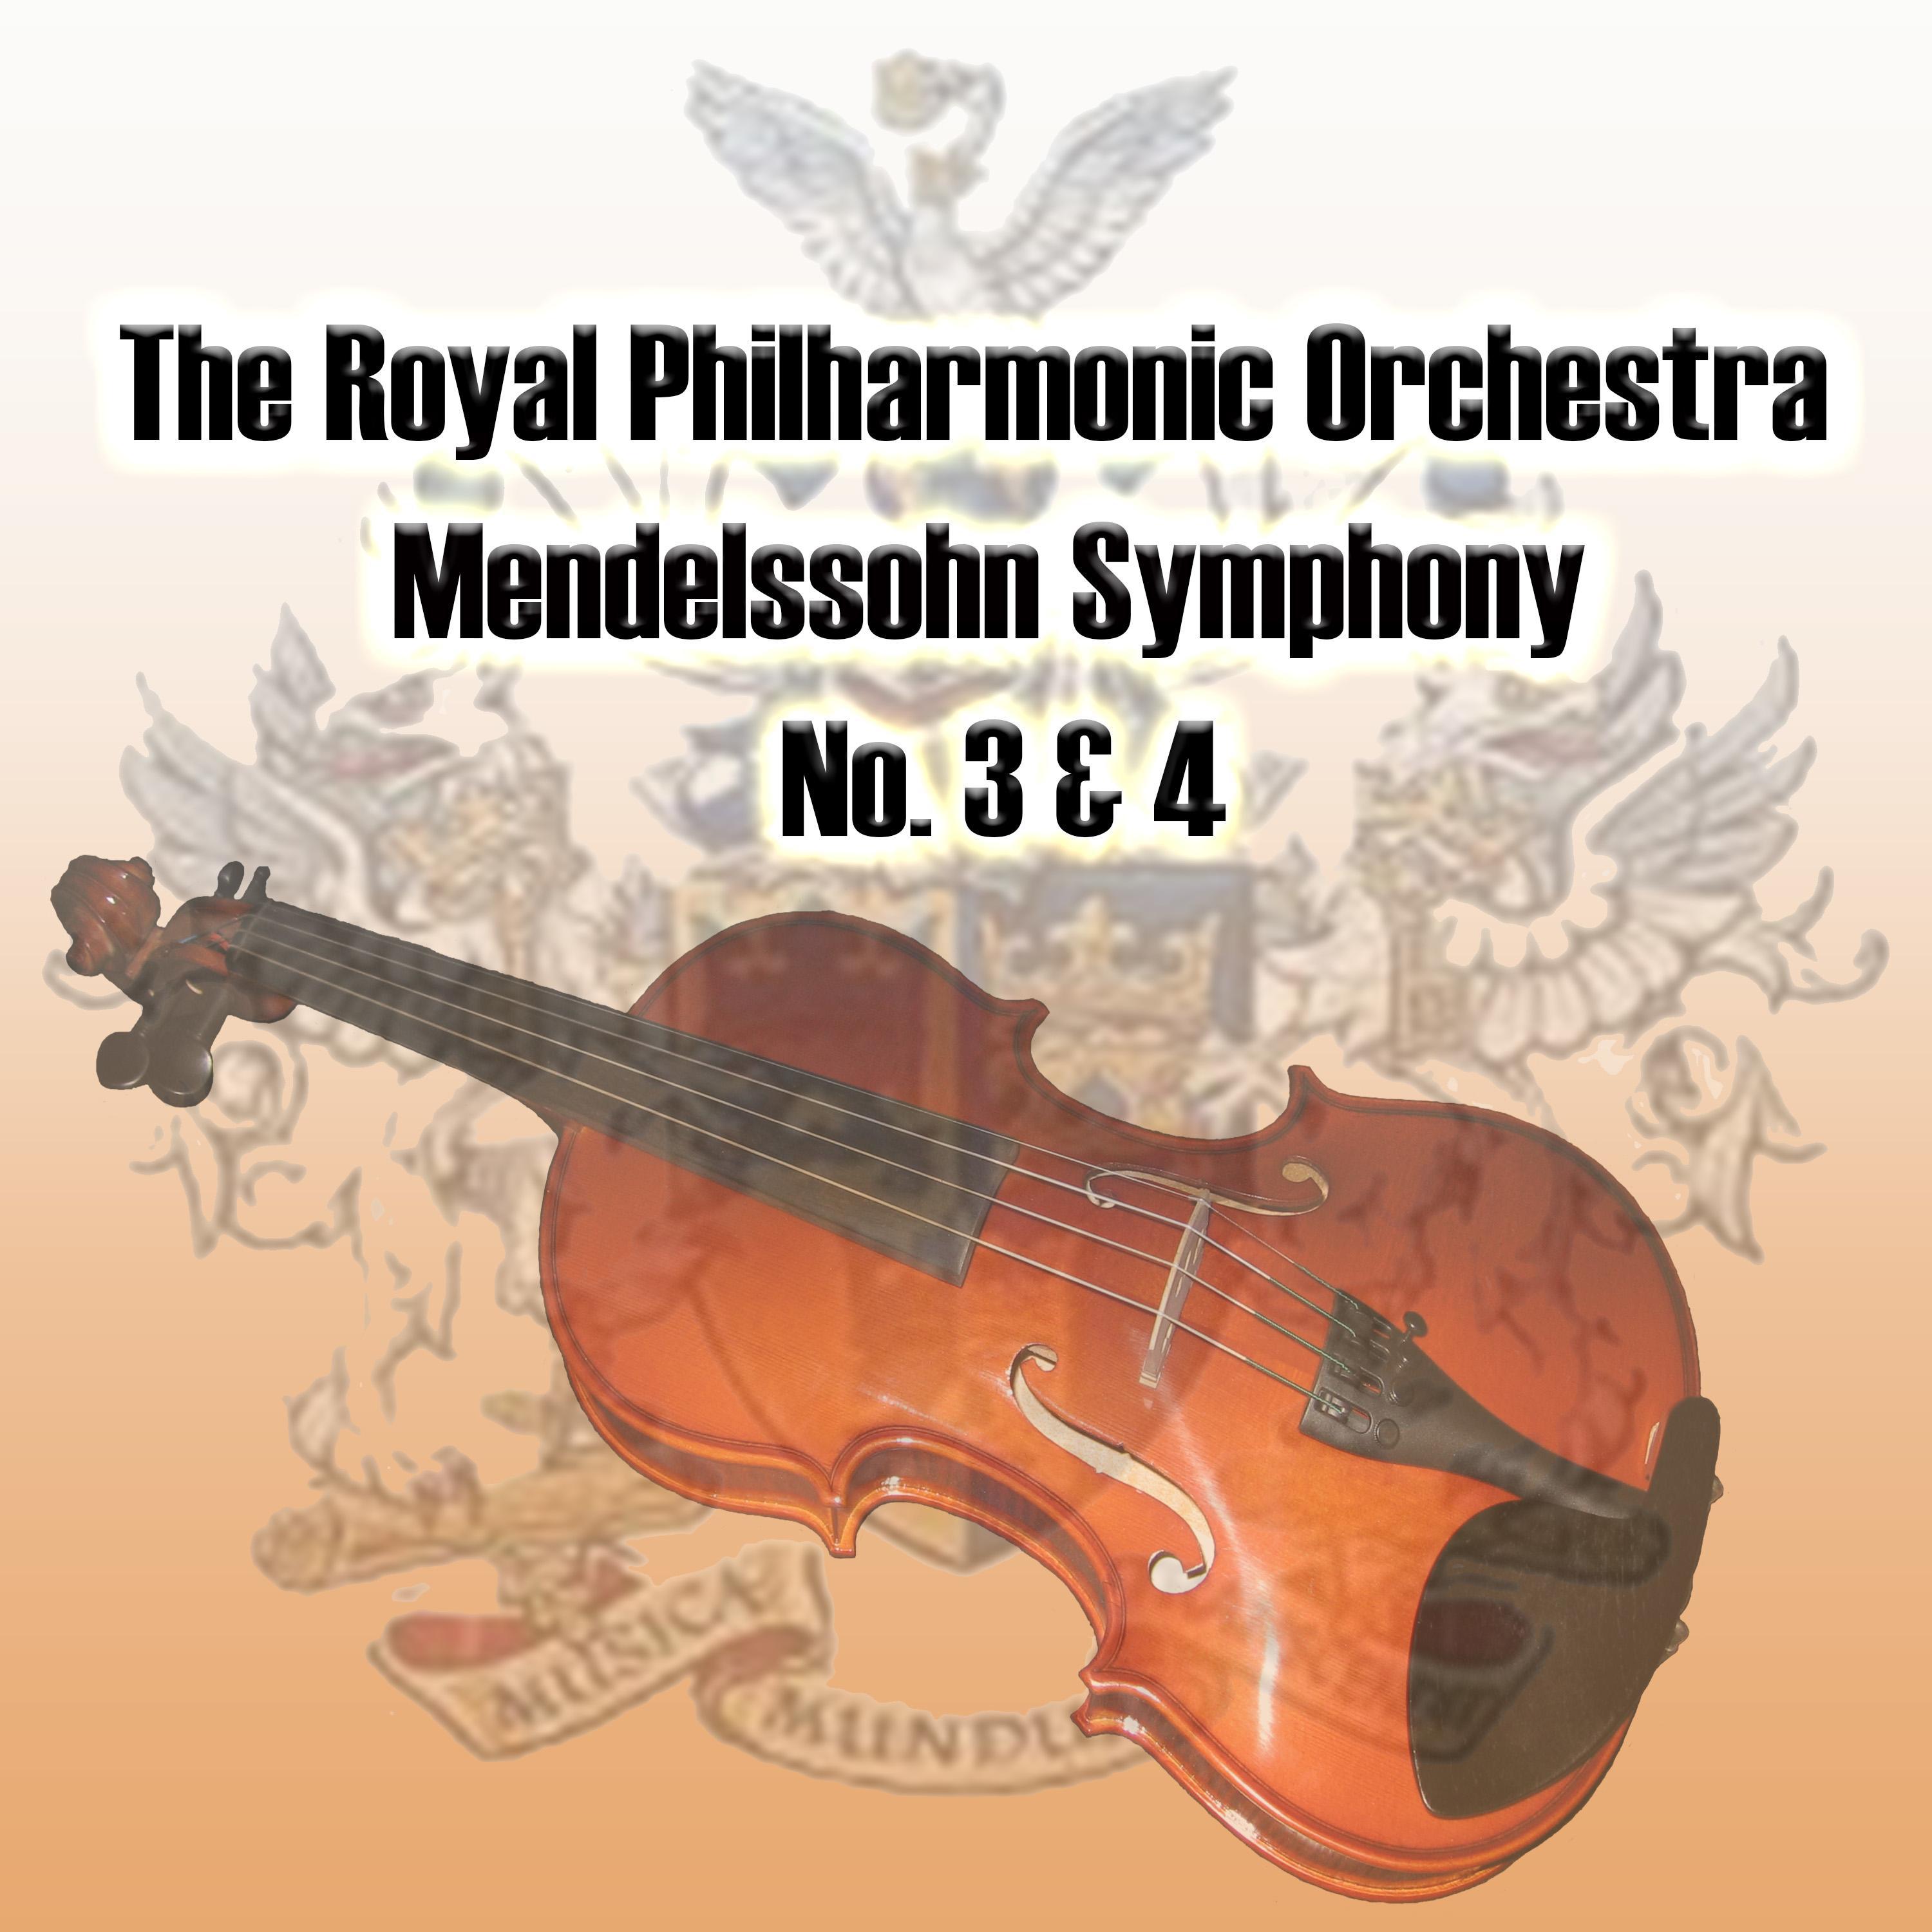 The Royal Philharmonic Orchestra - Mendelssohn Symphony No. 3 & 4